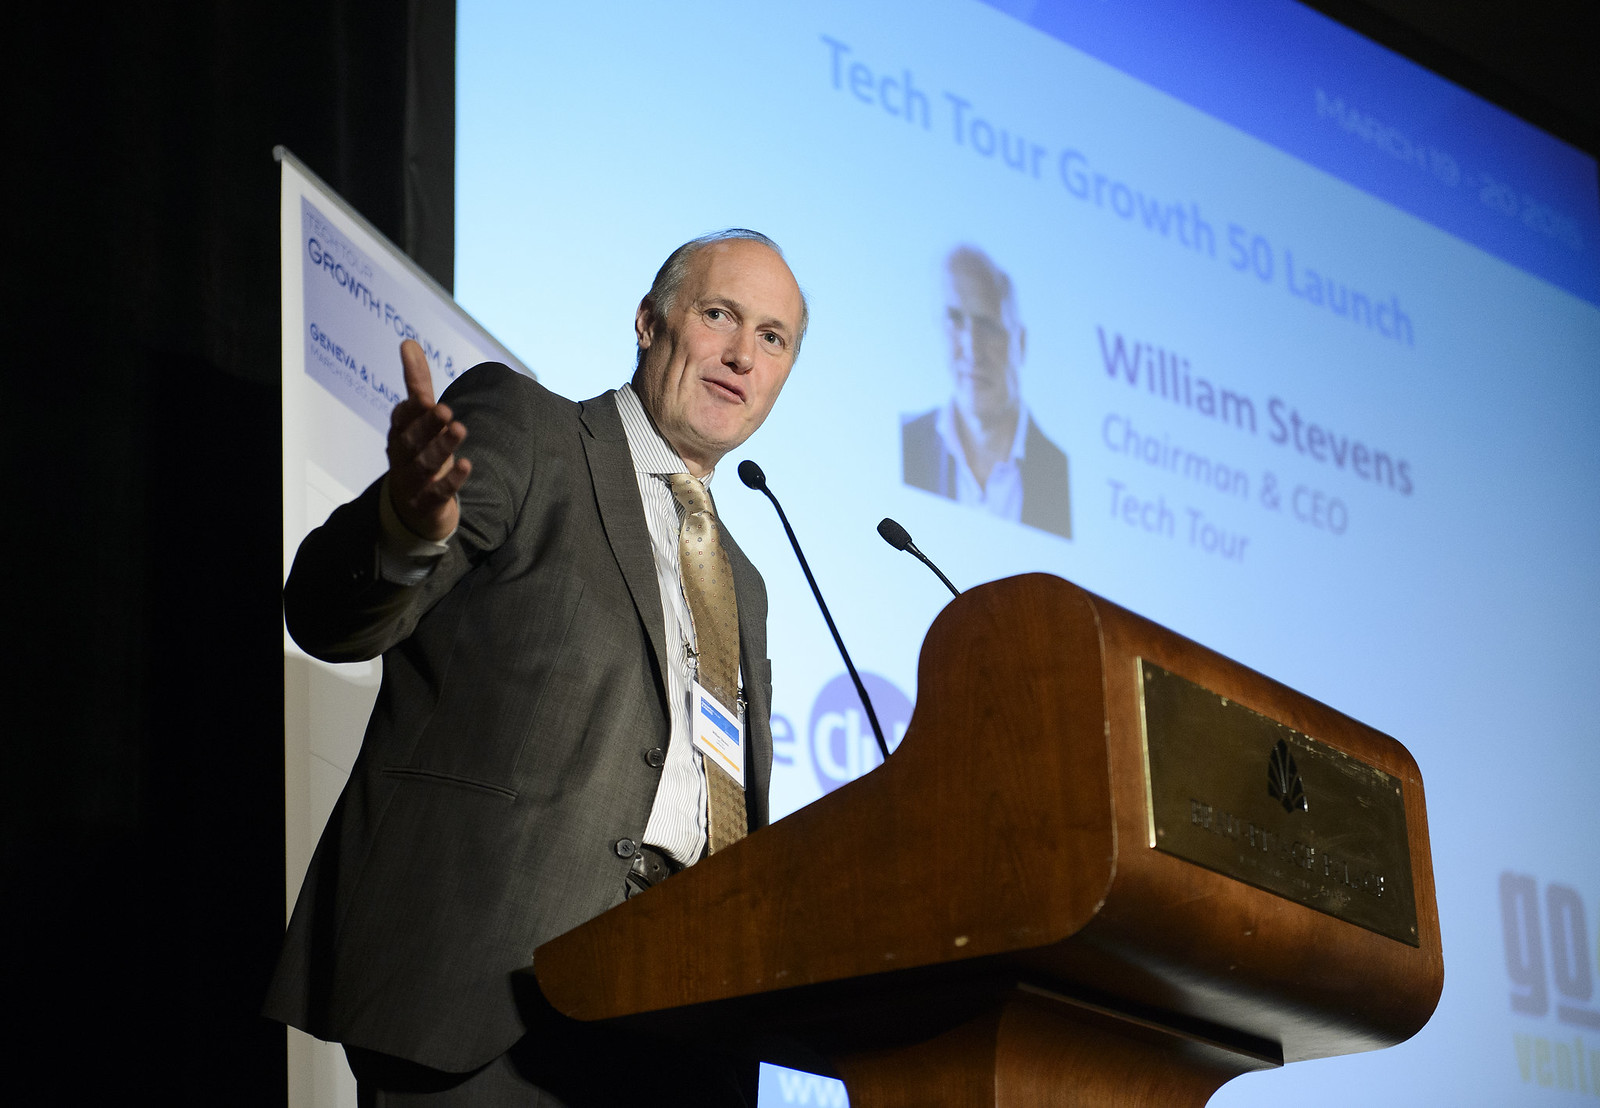 36 William Stevens Launch TT Growth 50